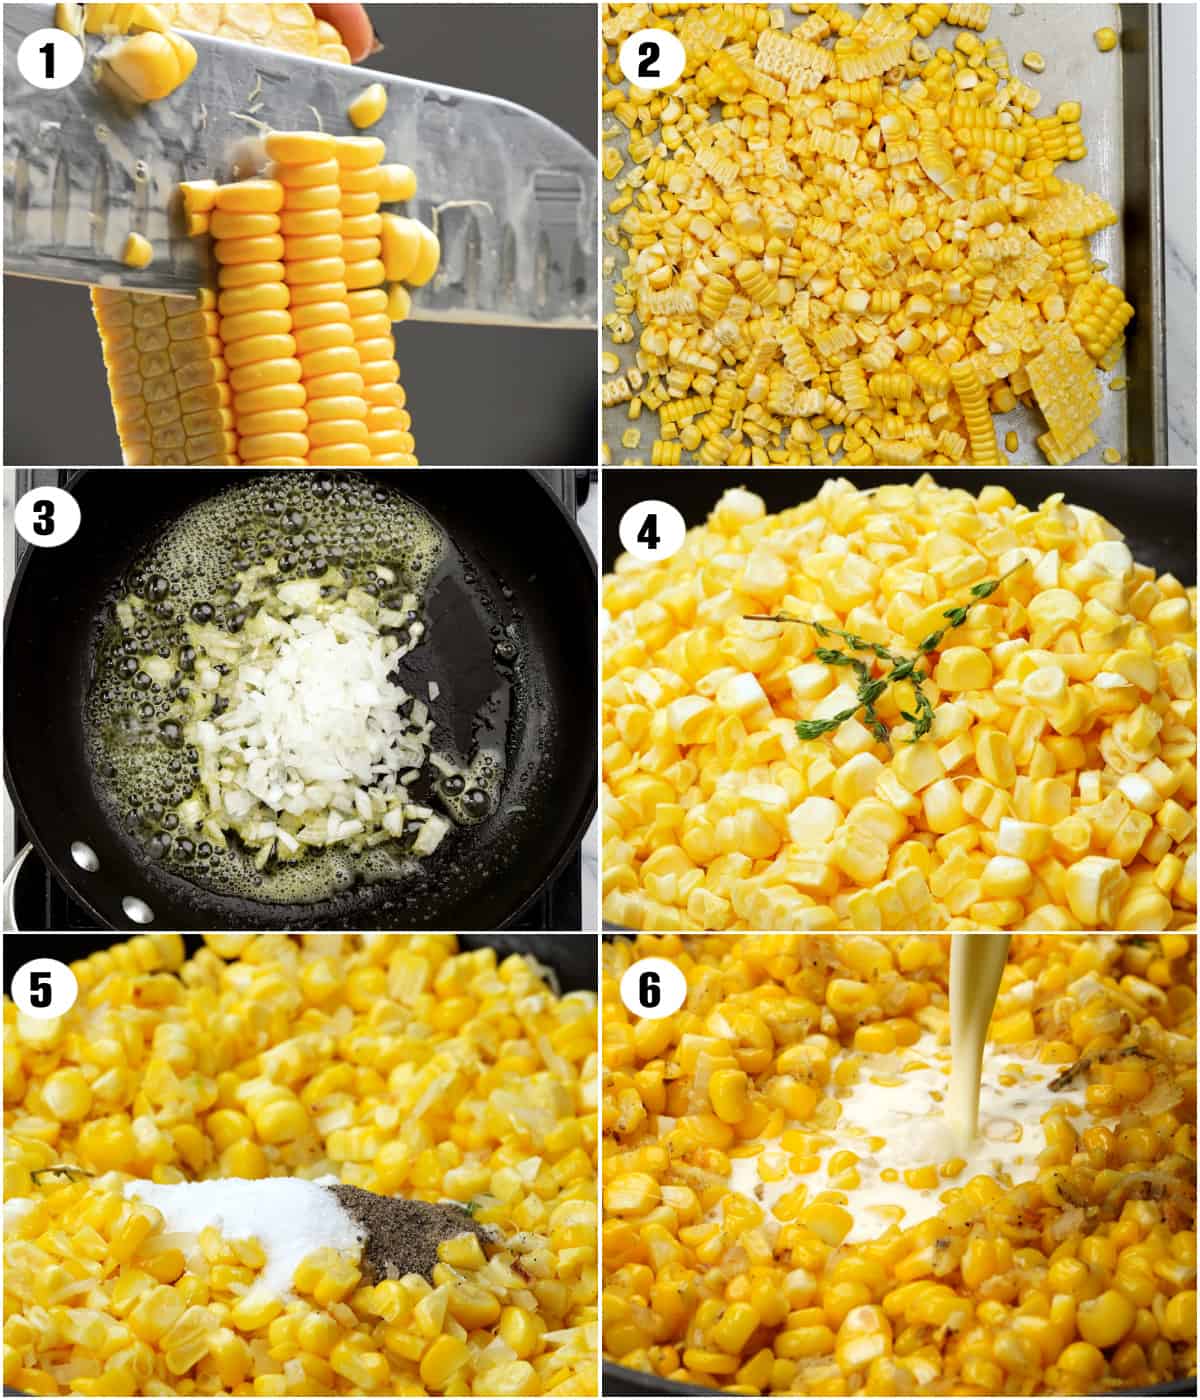 Steps to make creamed corn
